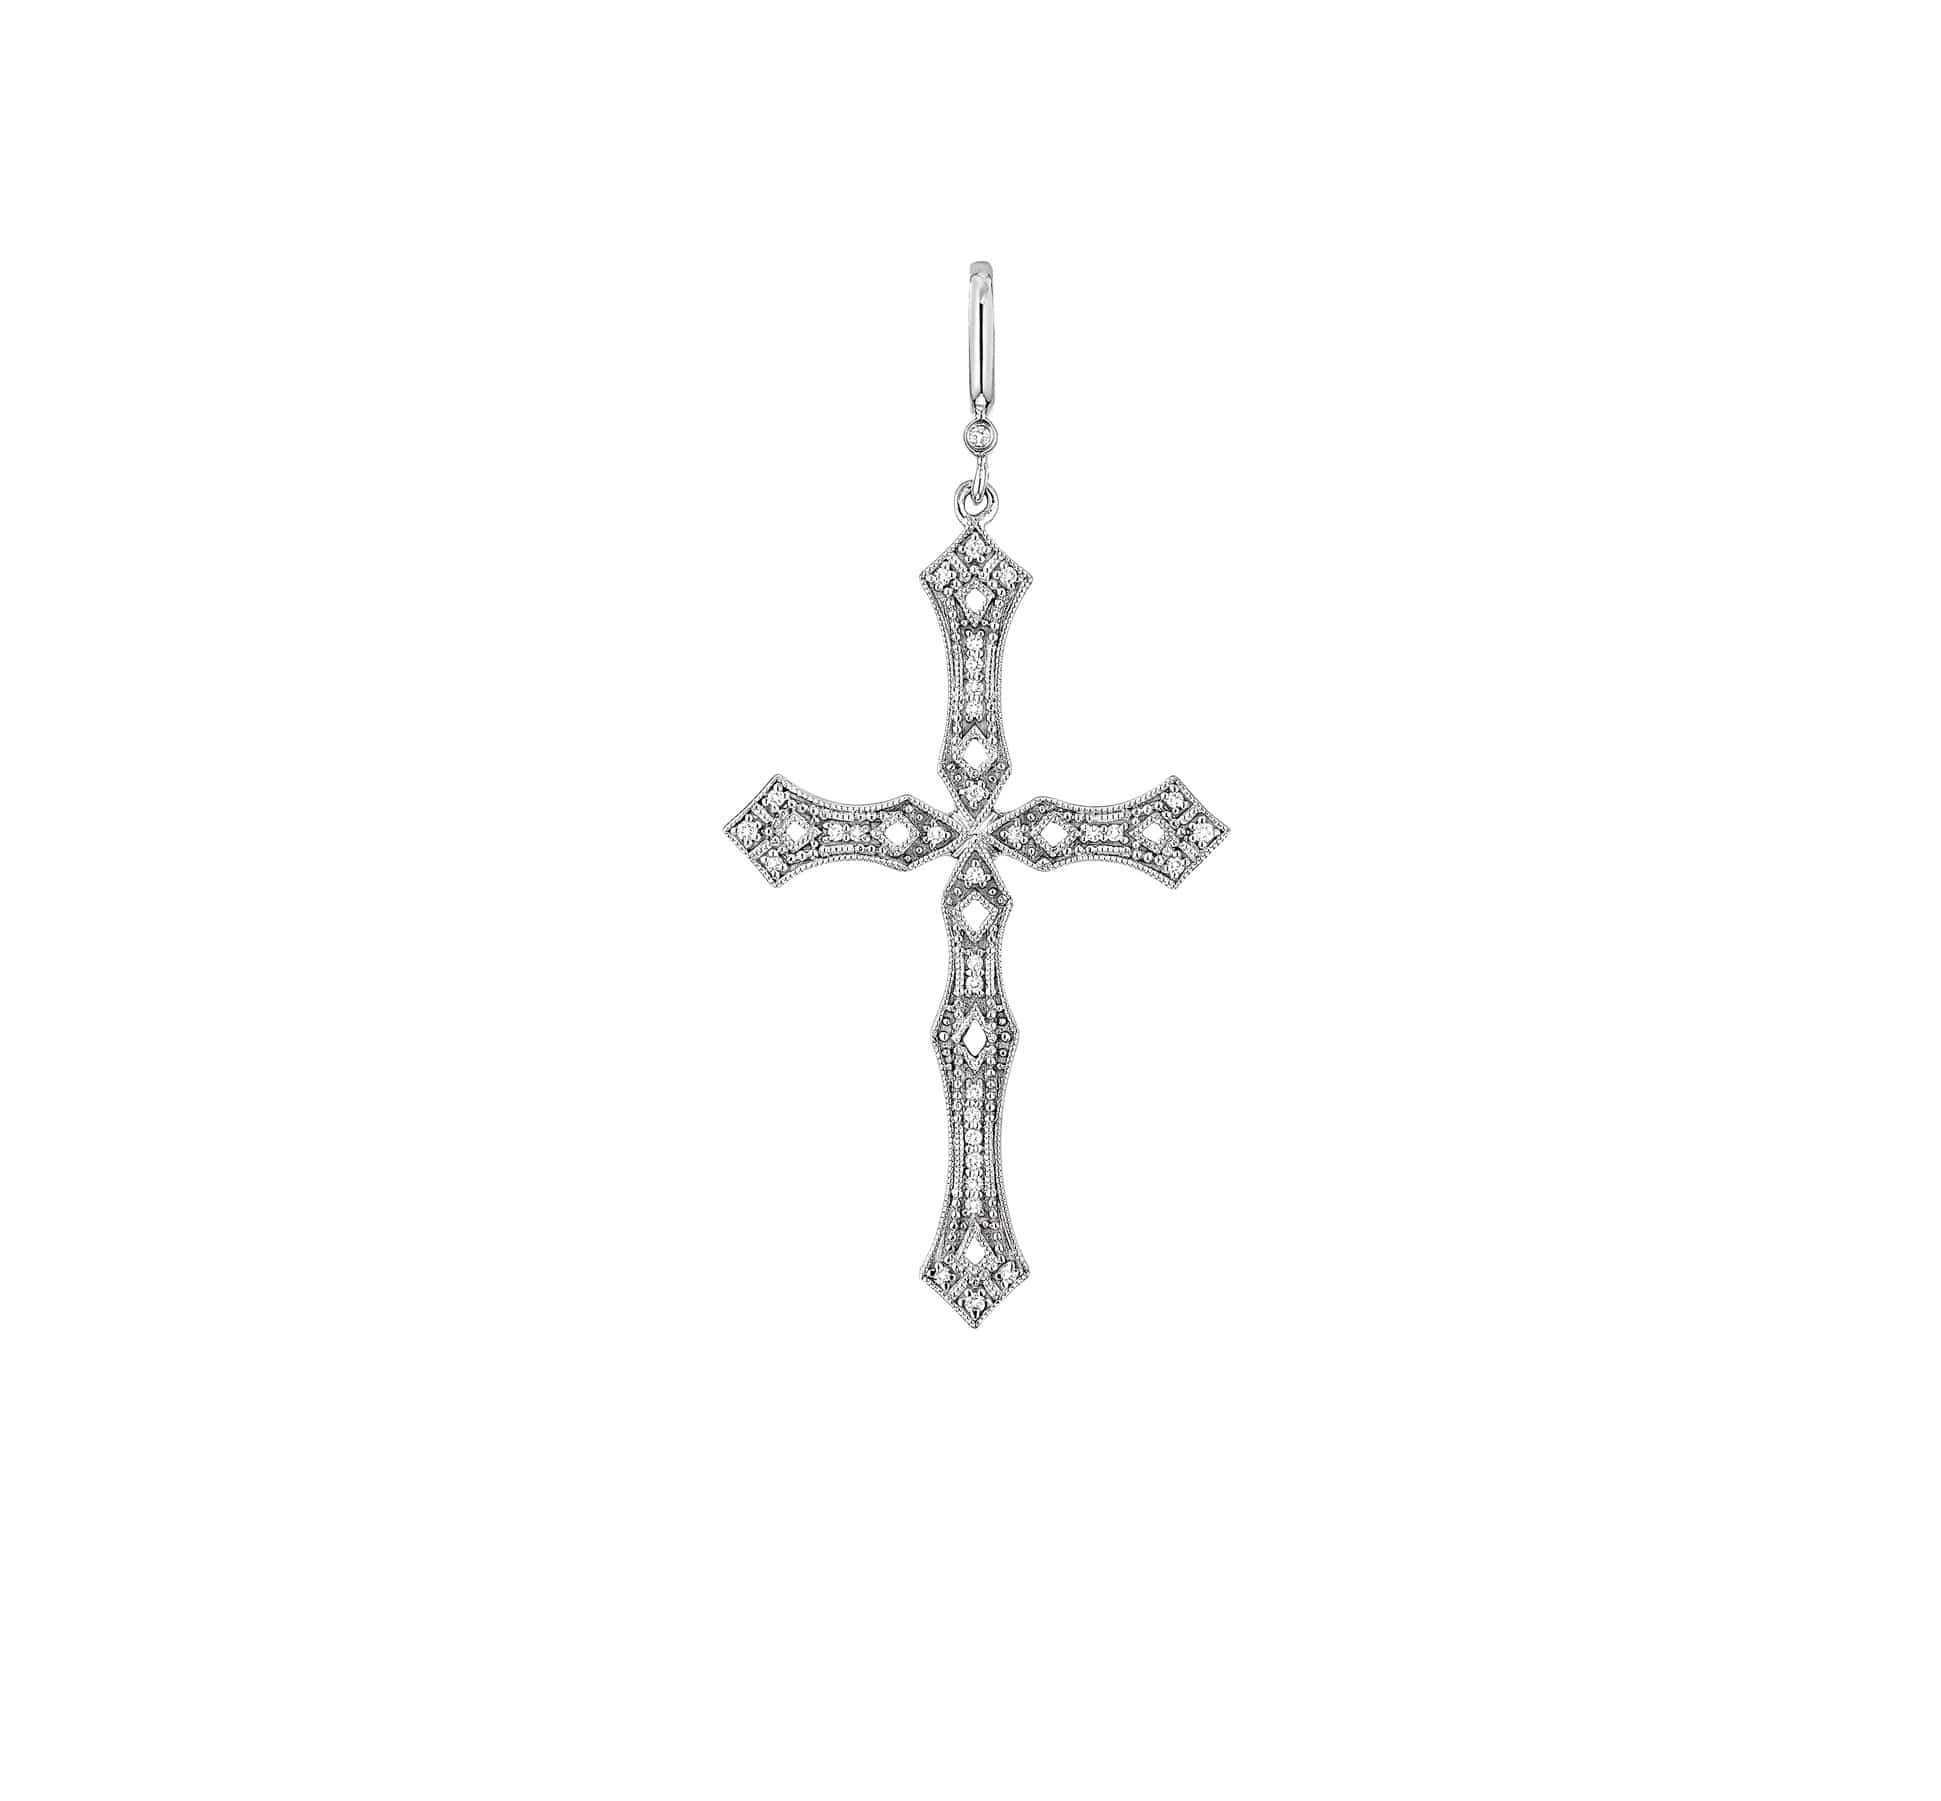 Faith Gold and diamonds small pendant